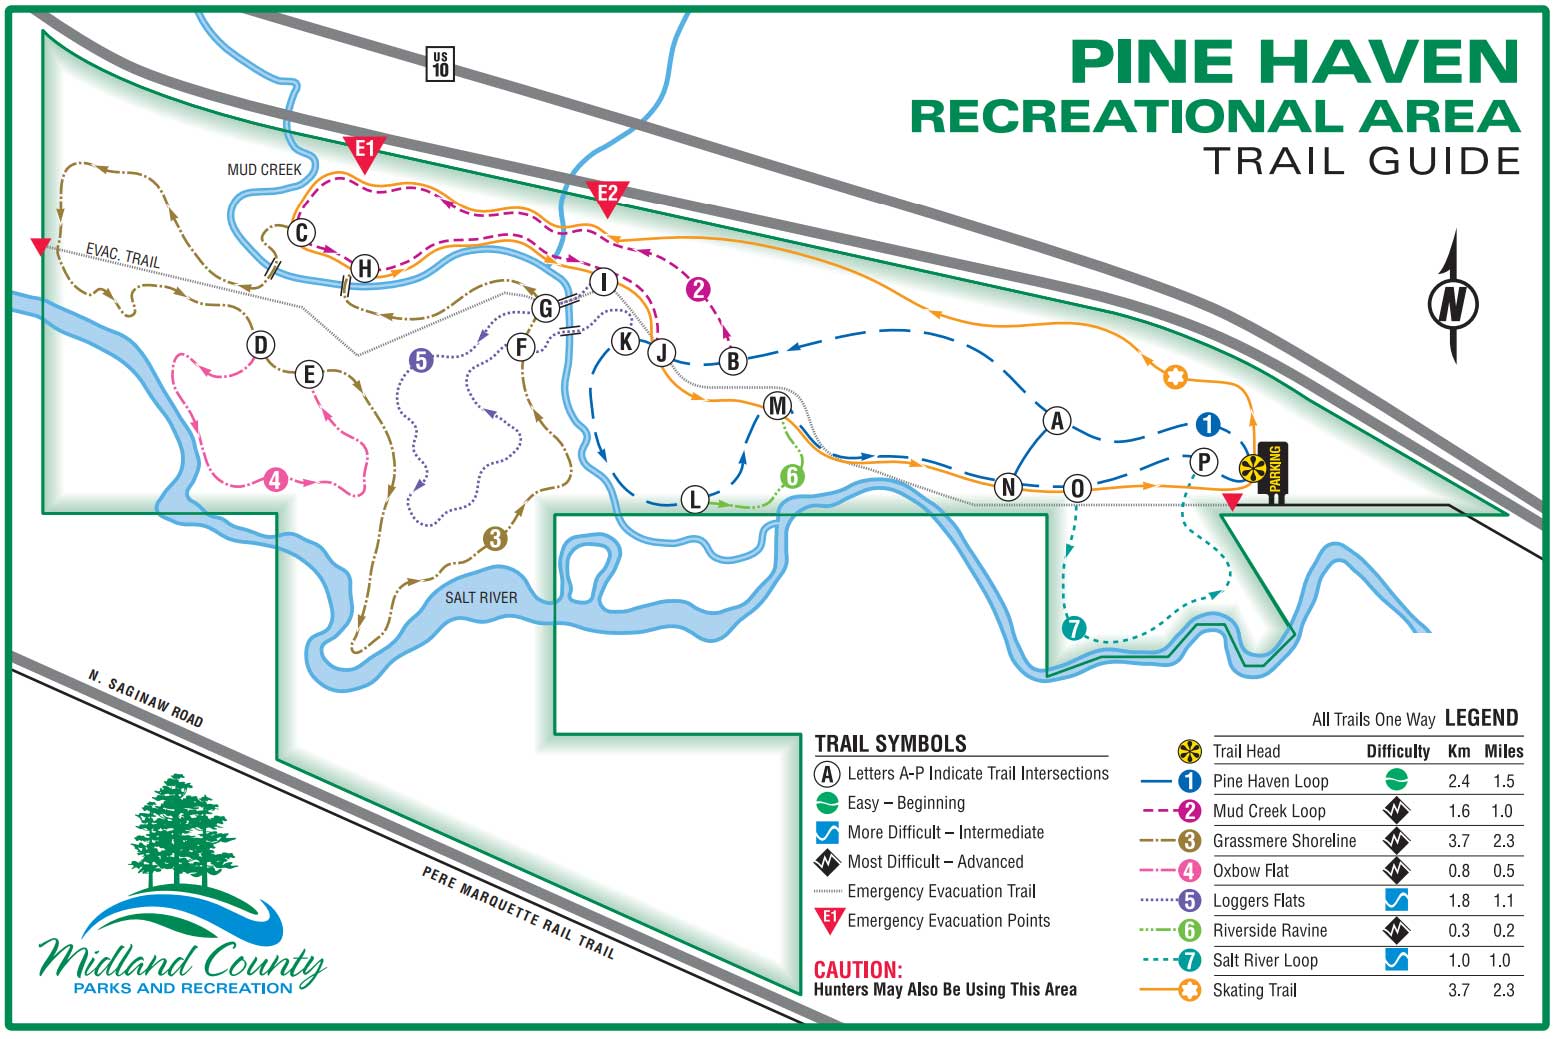 Pine Haven Recreation Area